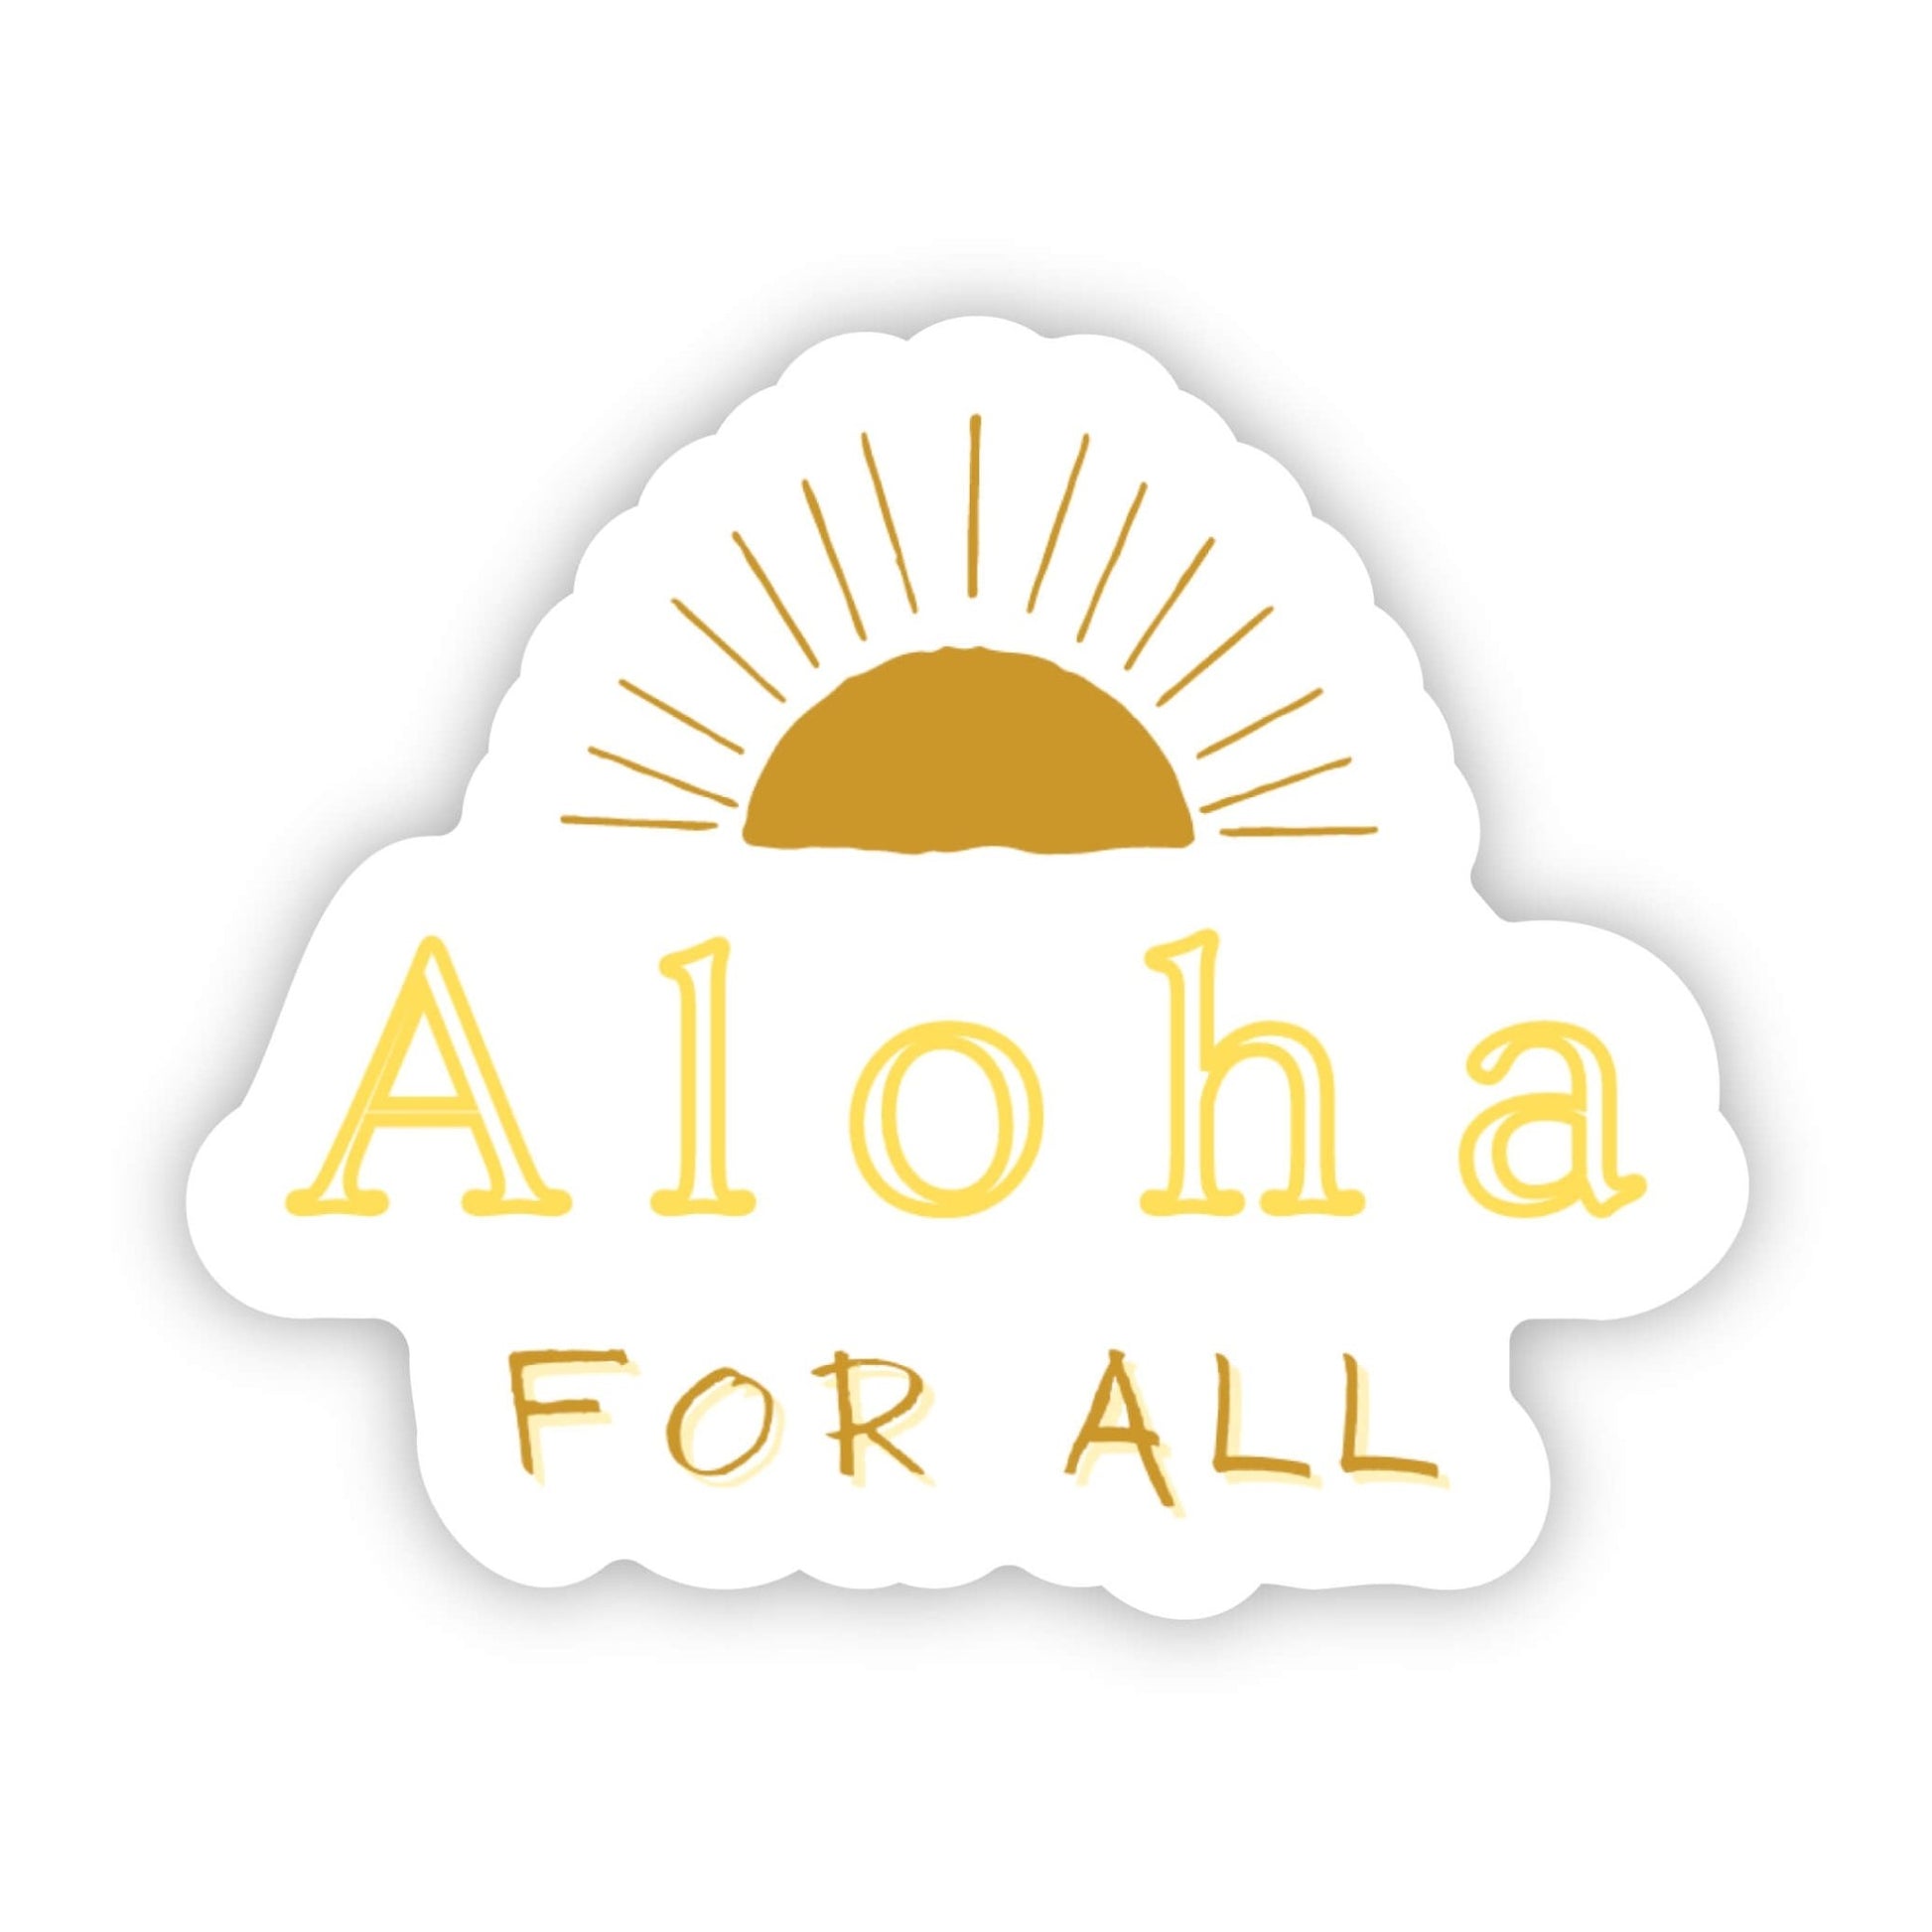 Aloha for All Sun Sticker 3" Global Village Kailua Boutique